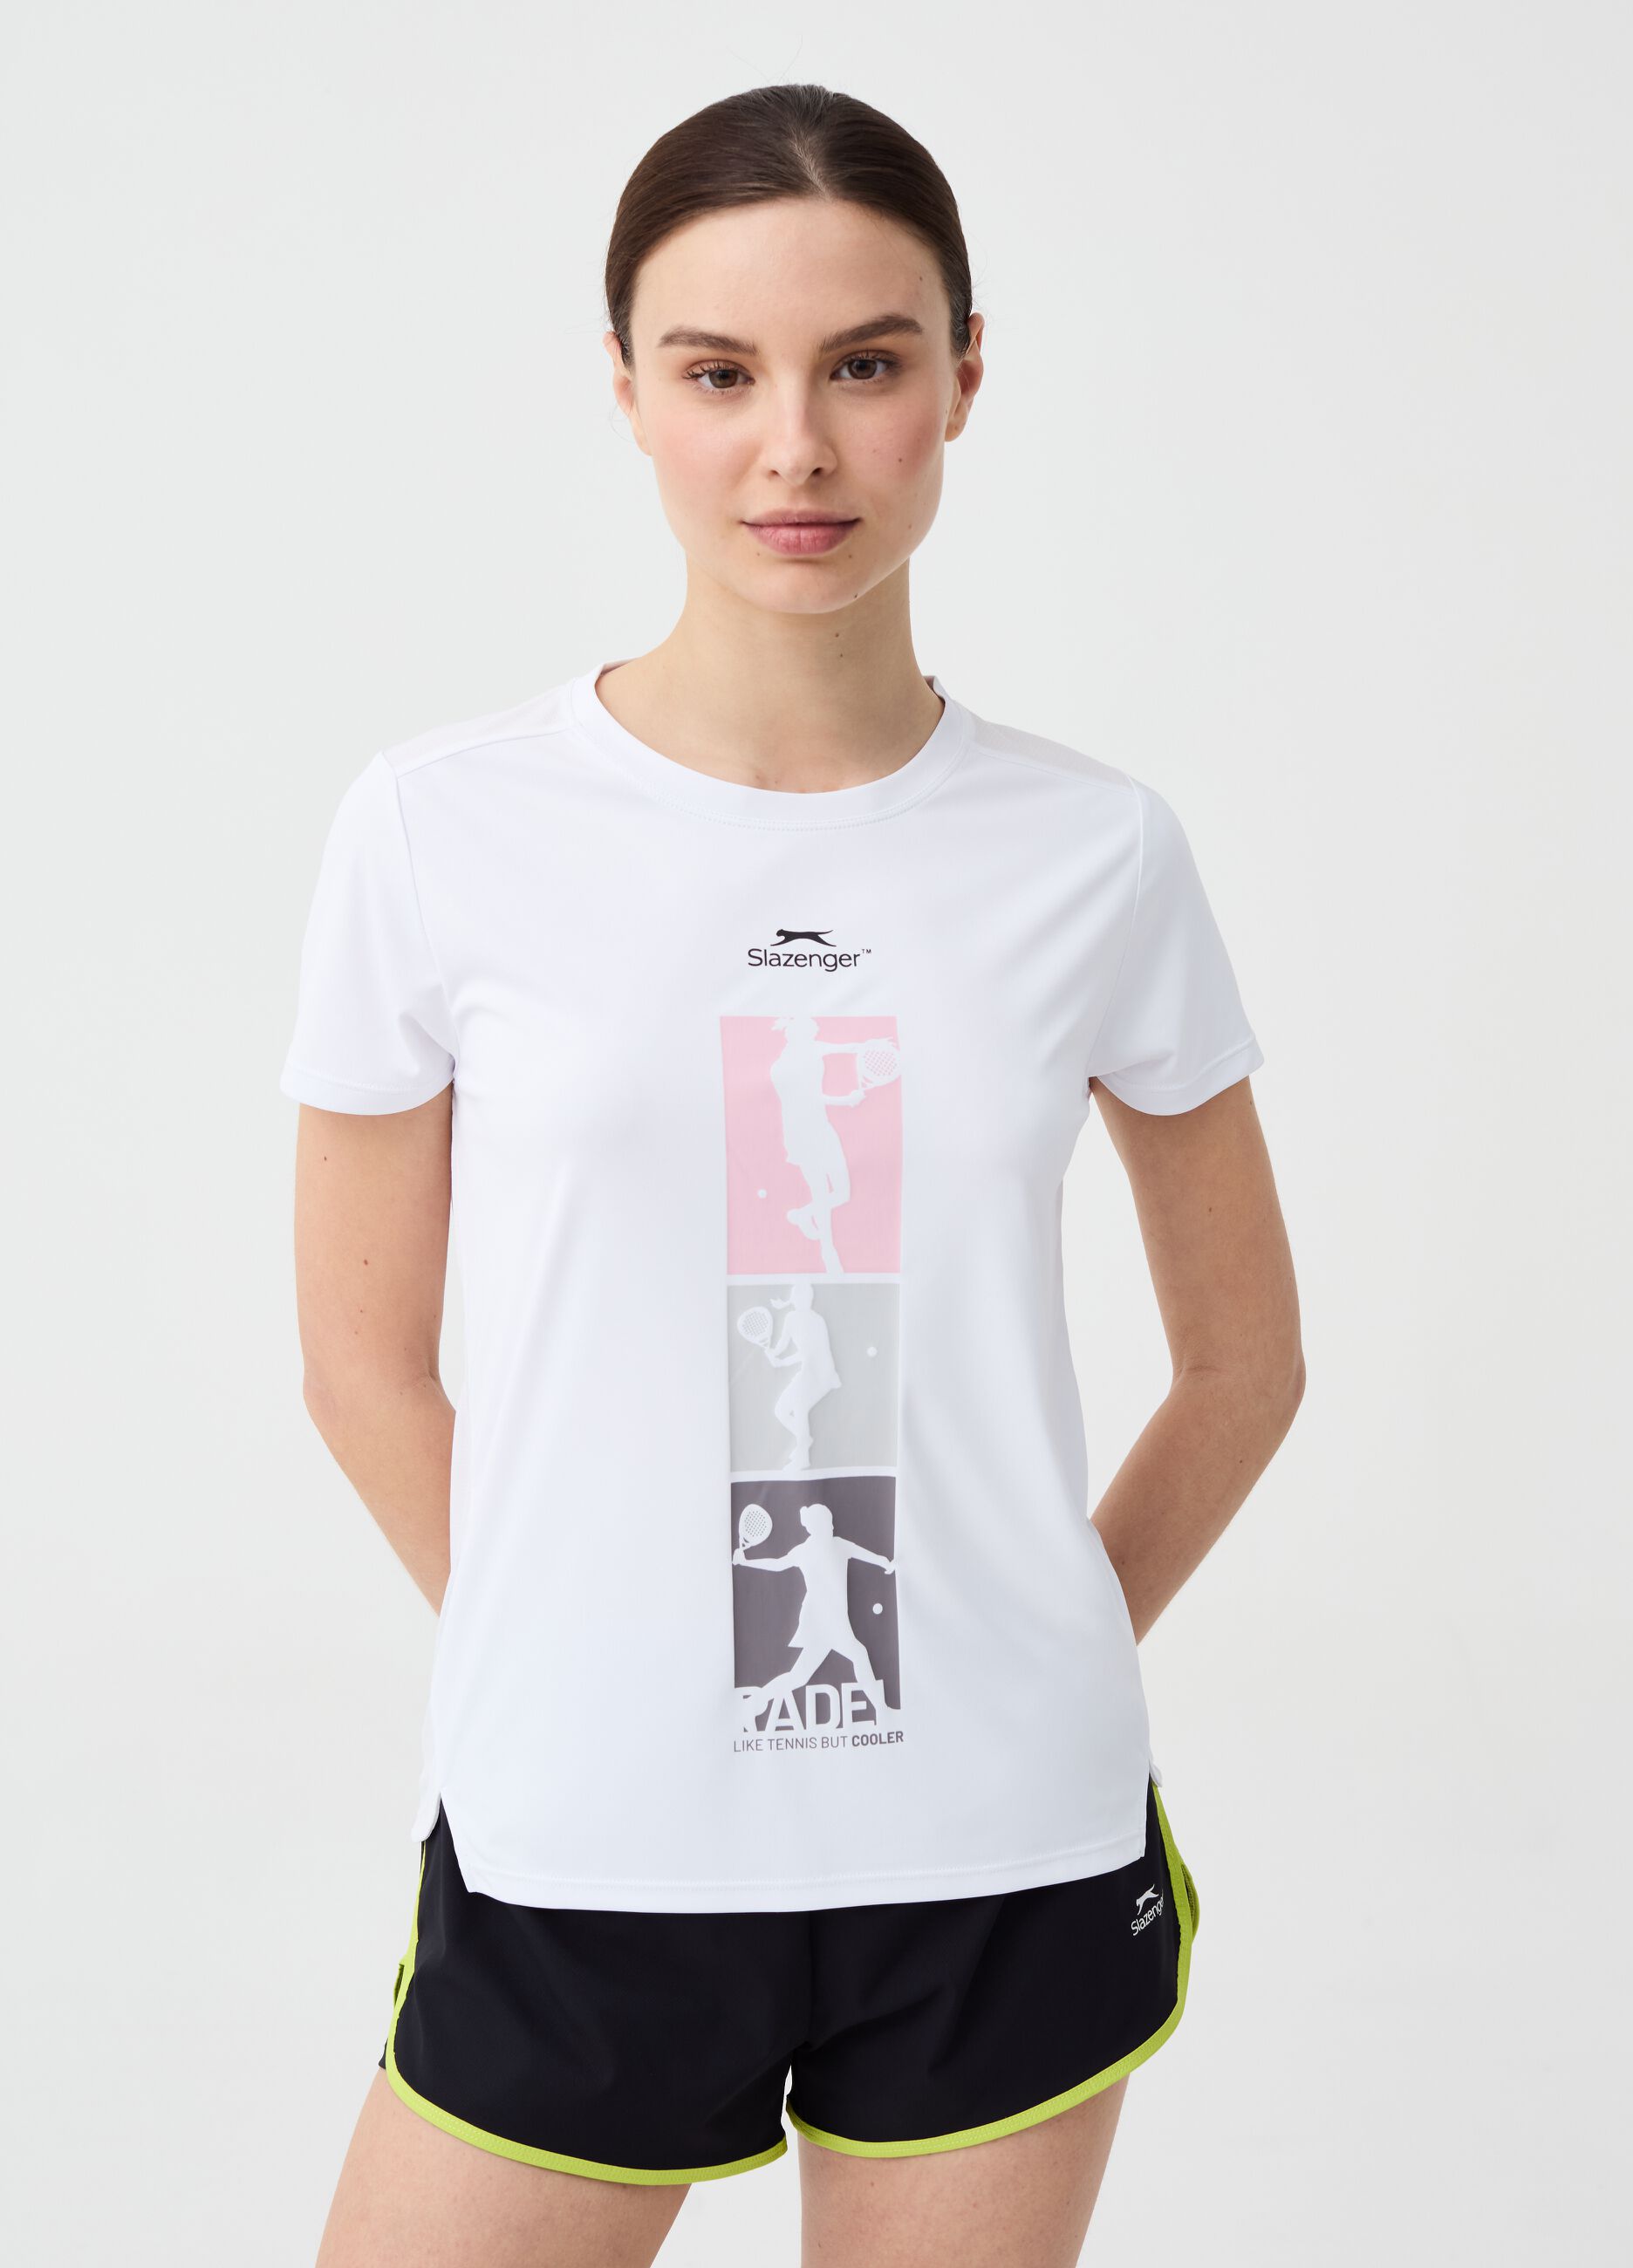 Slazenger padel T-shirt with print